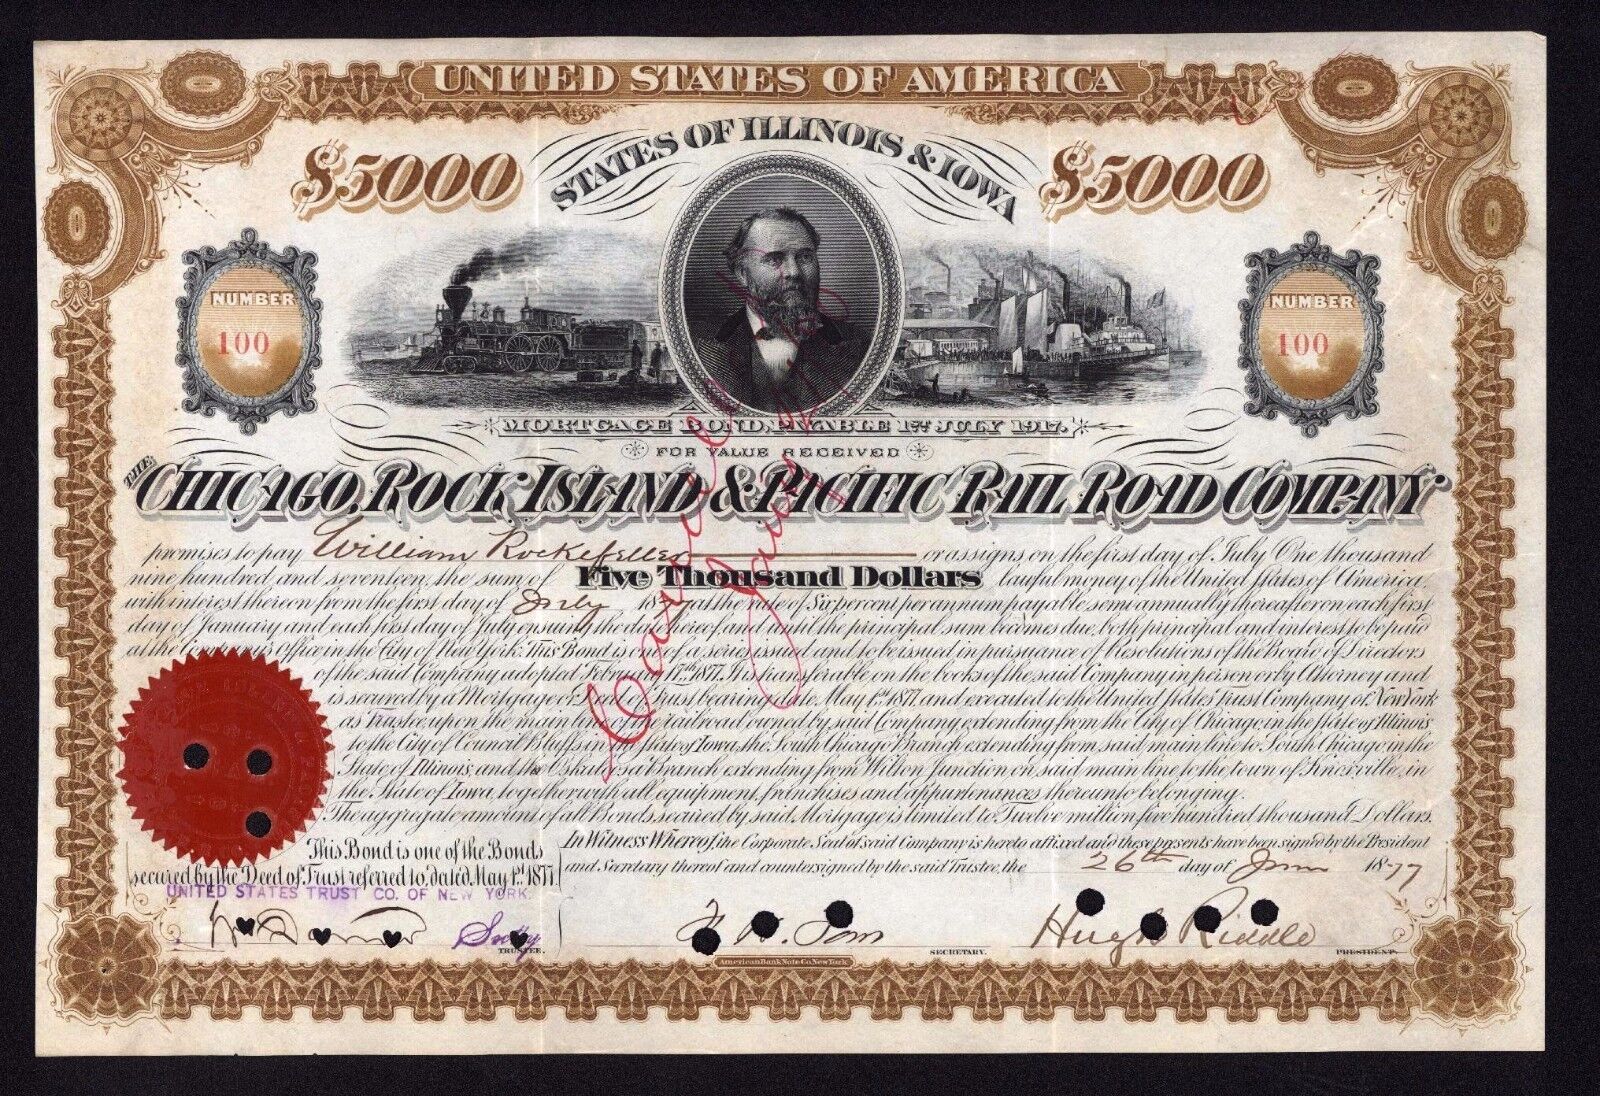 1878 William Rockefeller Standard Oil Partner signs 1877 Rare Stock Certificate